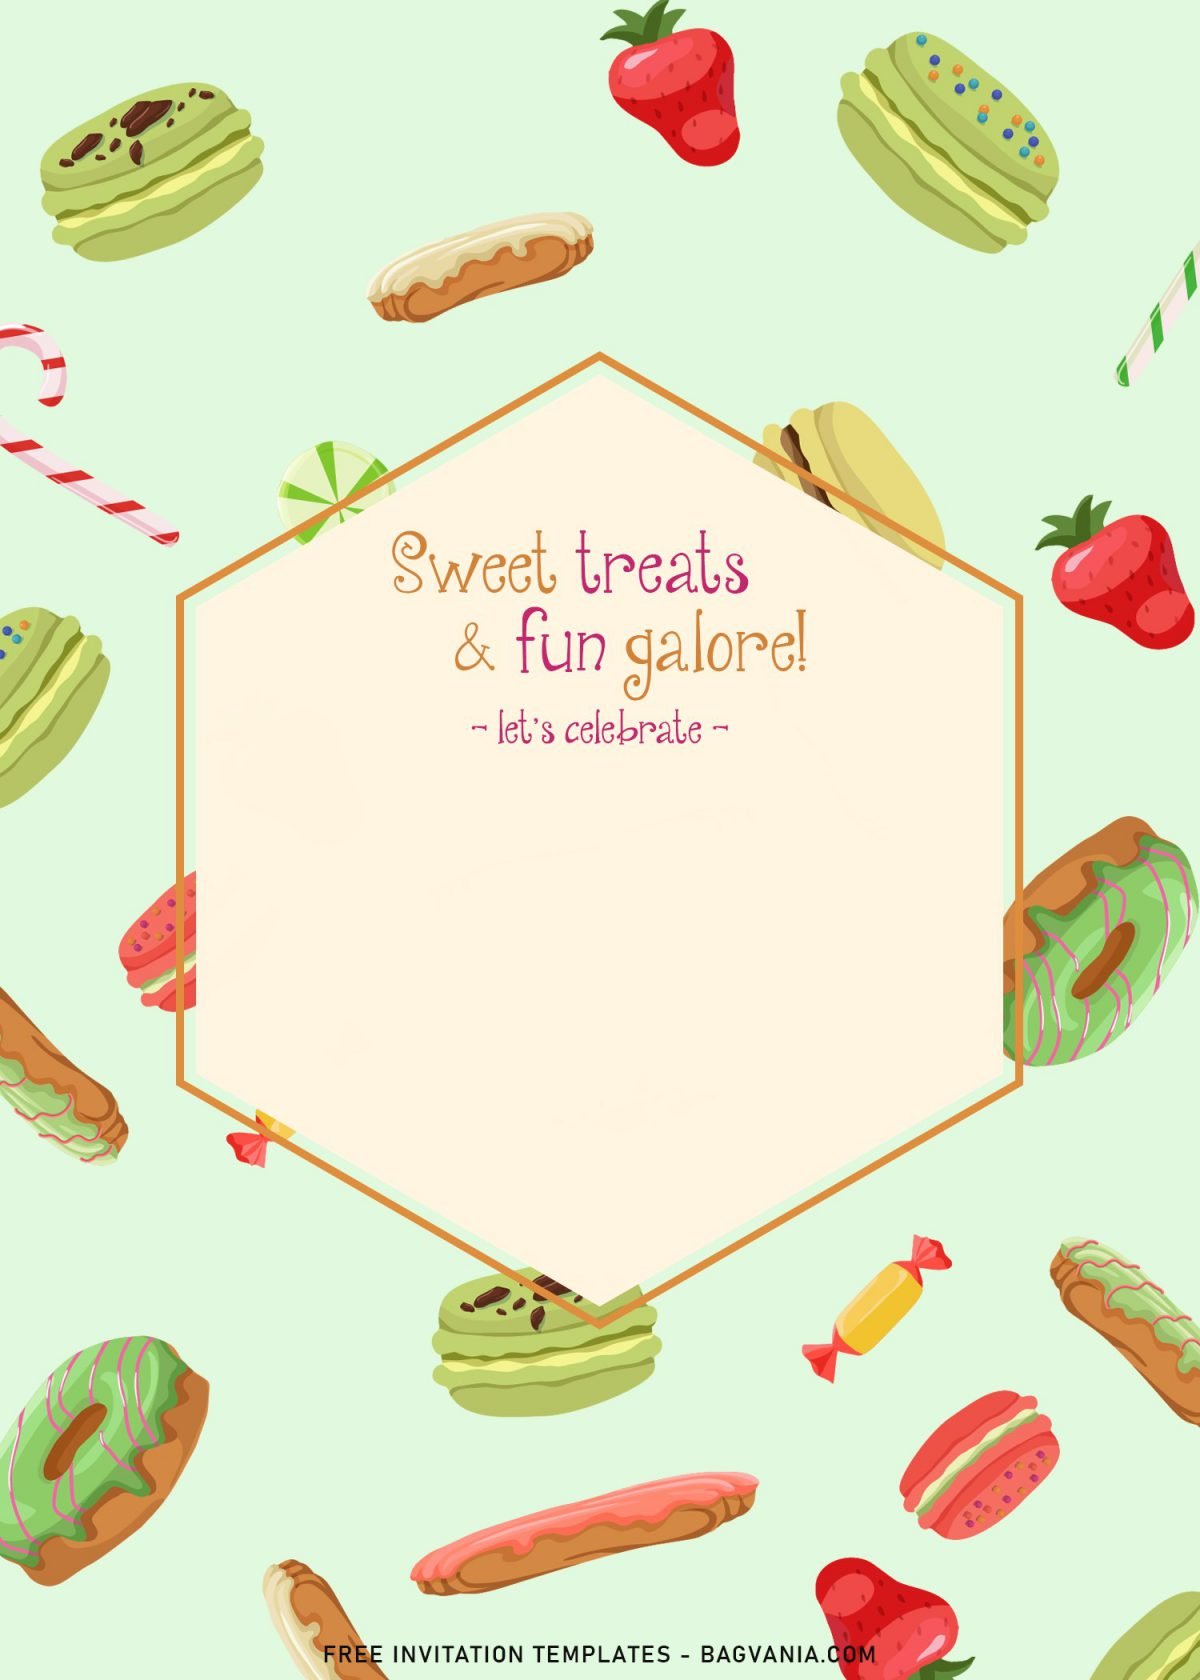 11+ Sweet Treats Fun Galore Birthday Invitation Templates and has glazed donut